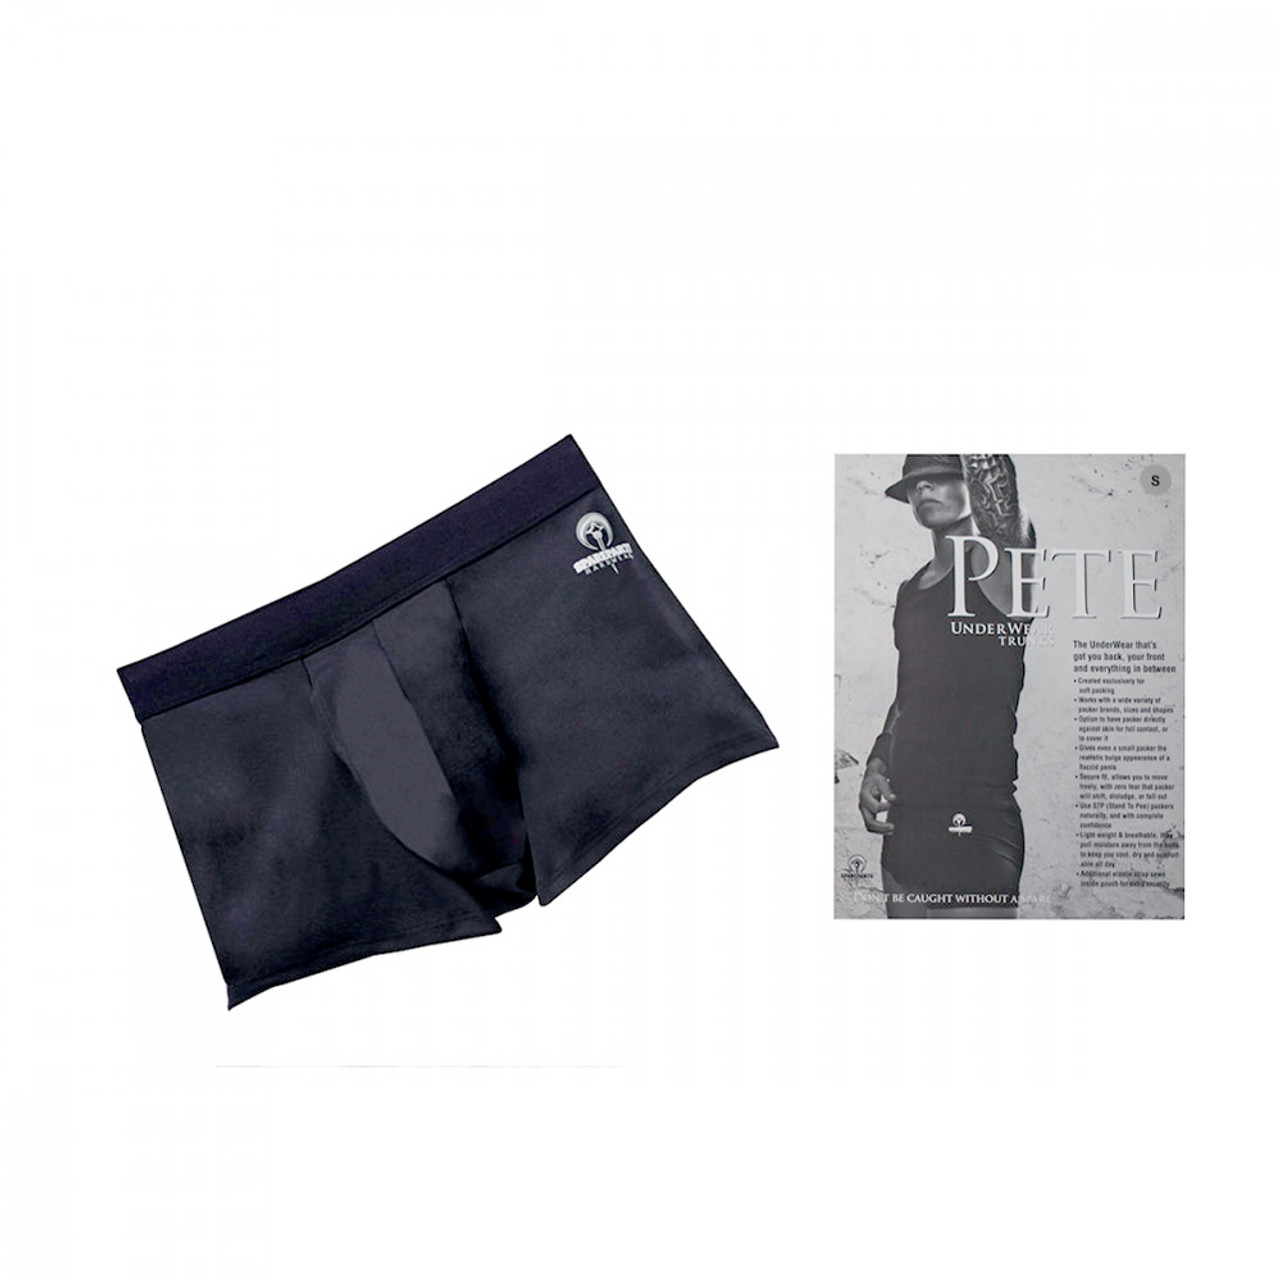 Pete Trunks FTM STP Transgender Underwear Boxer Briefs (2X) Black